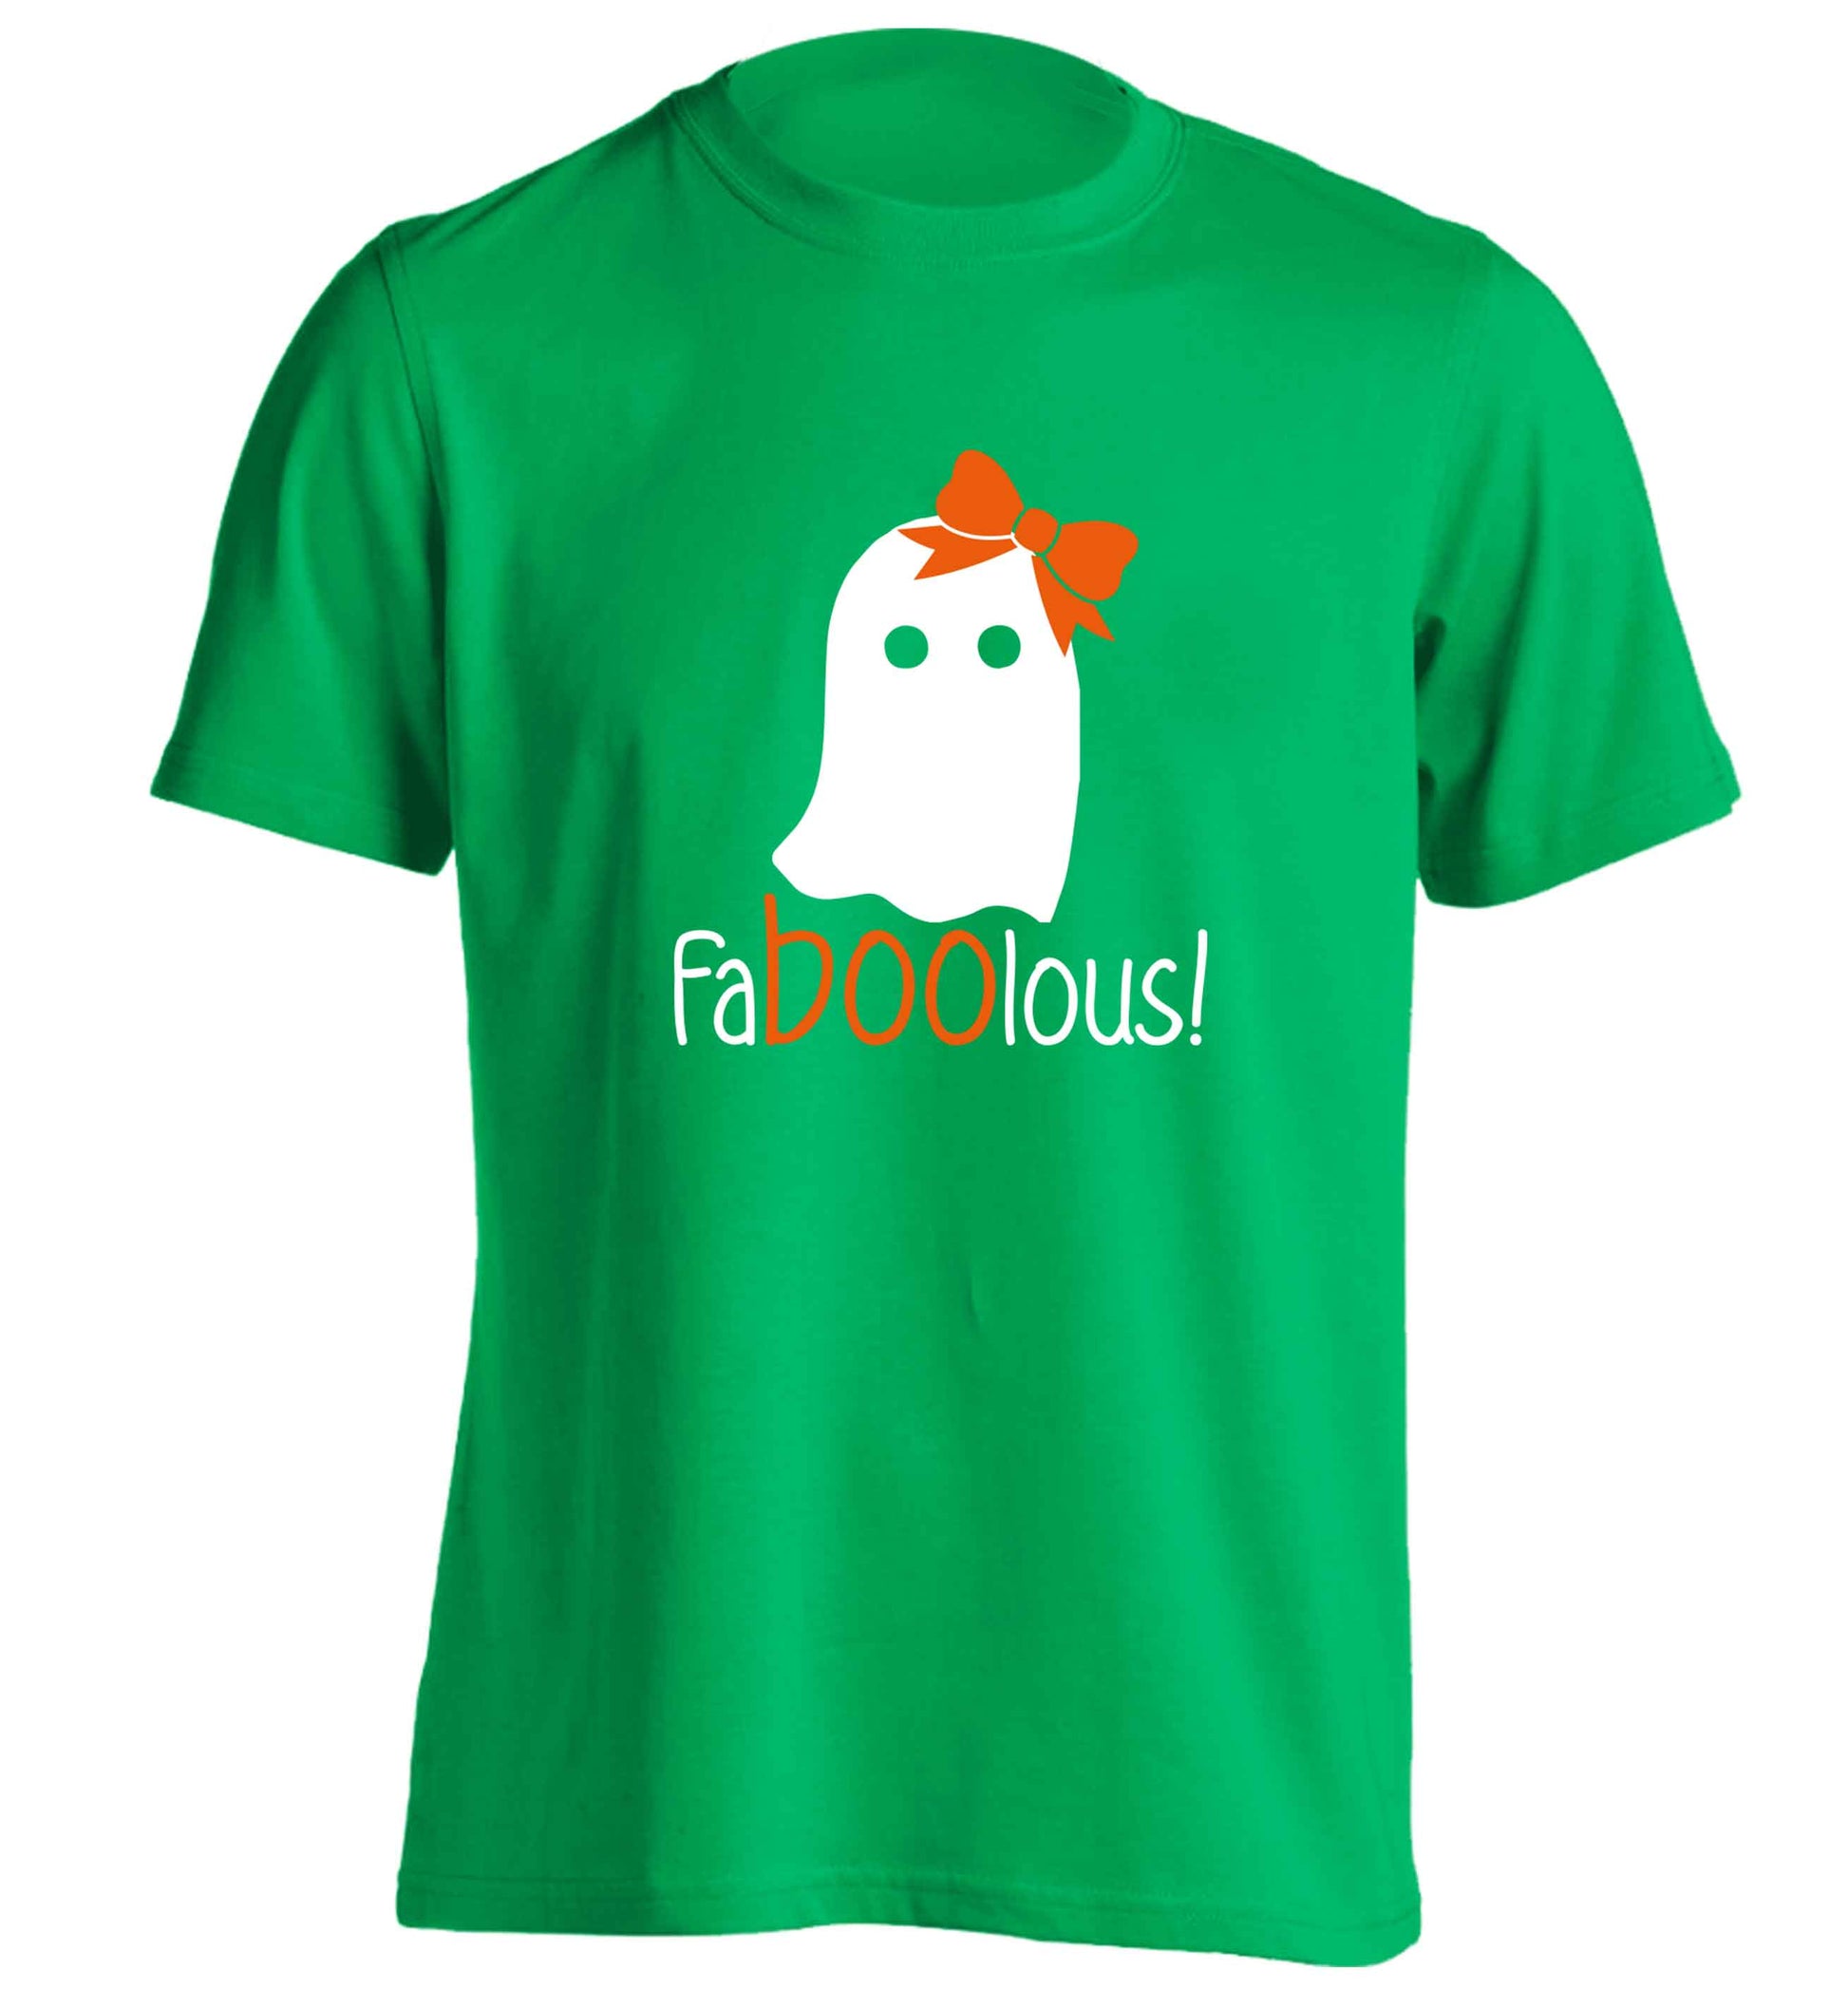 Faboolous ghost adults unisex green Tshirt 2XL